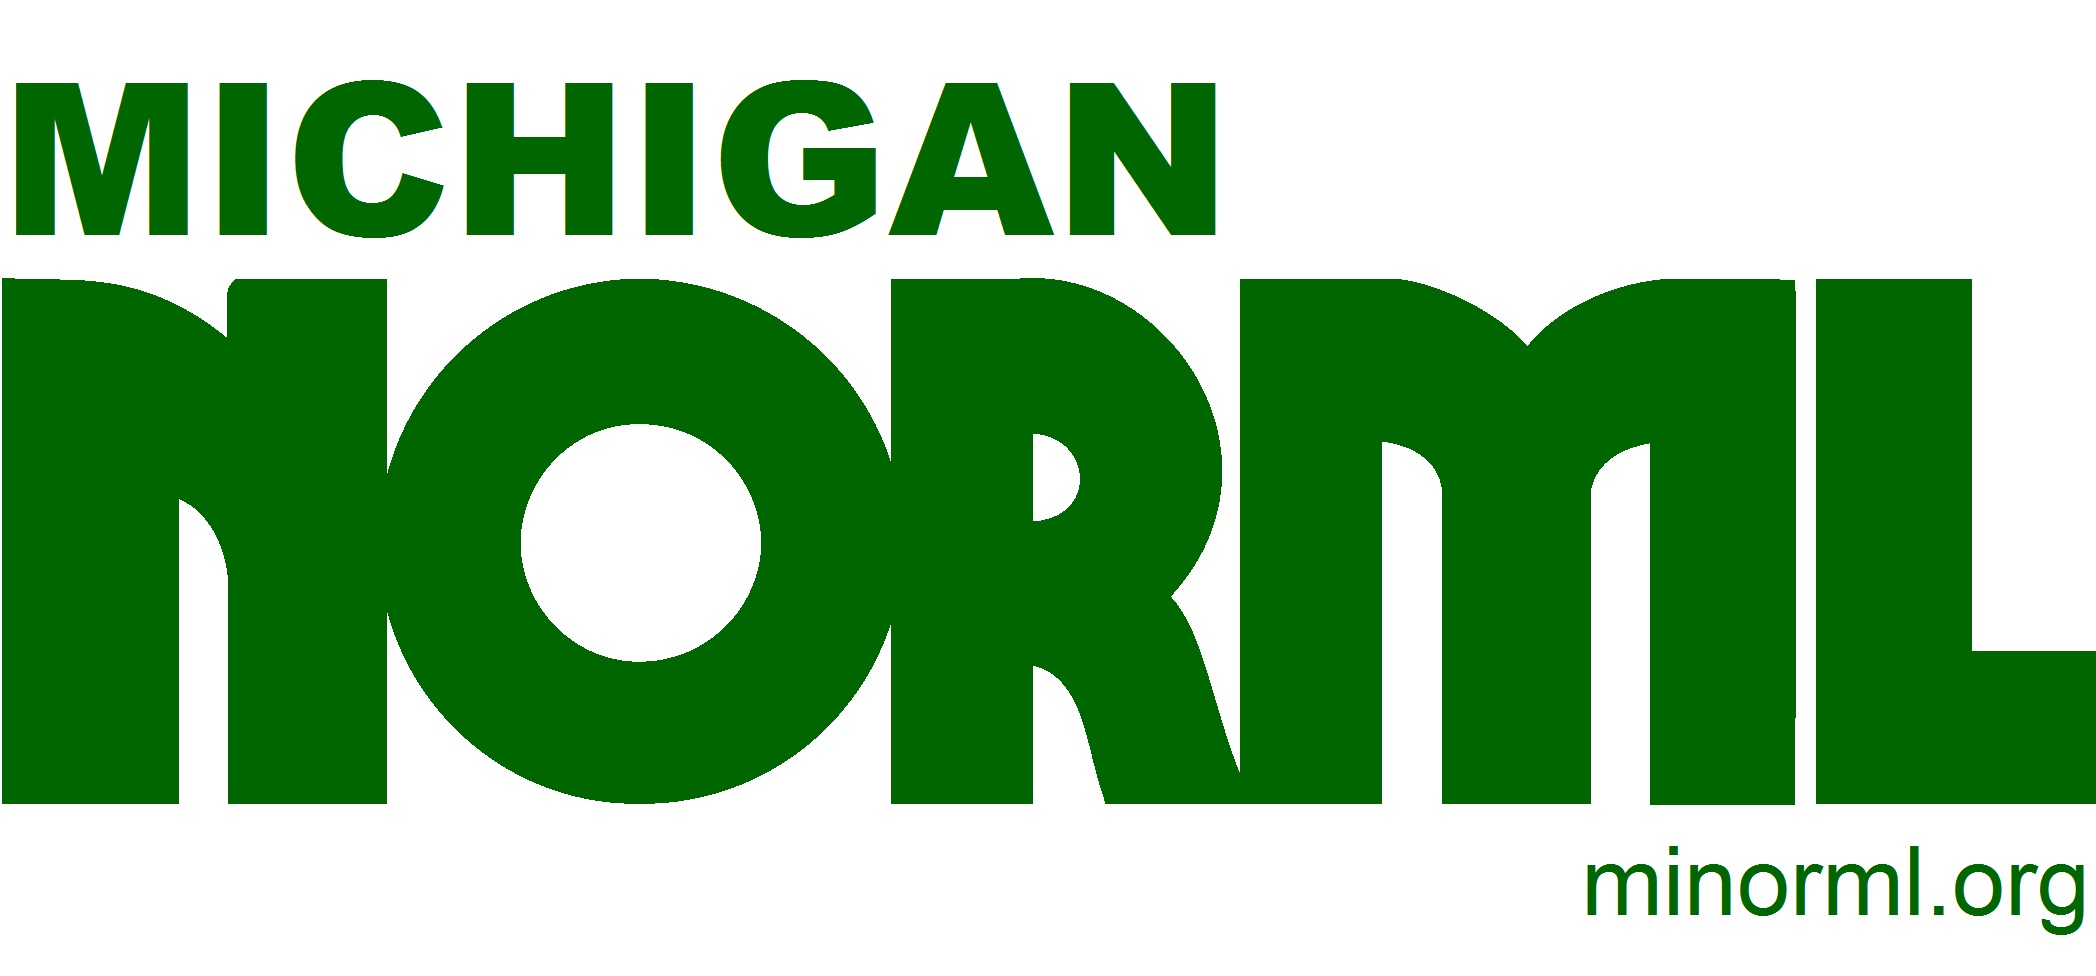 Michigan Norml logo